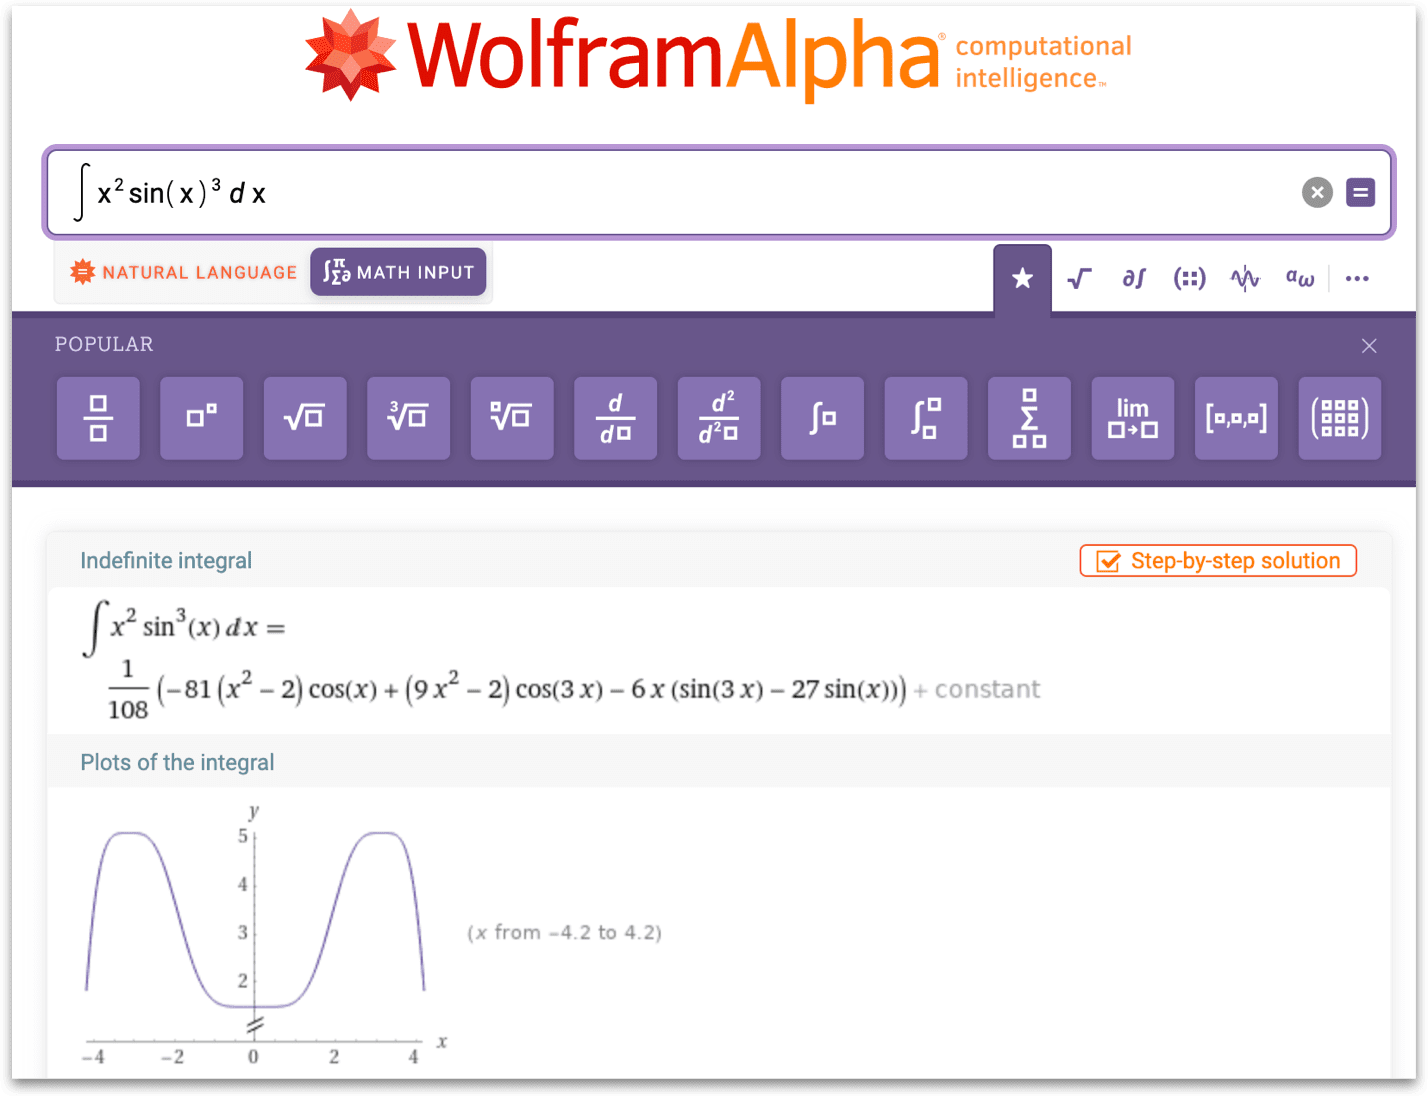 Entradas matemáticas en wolframalpha.com